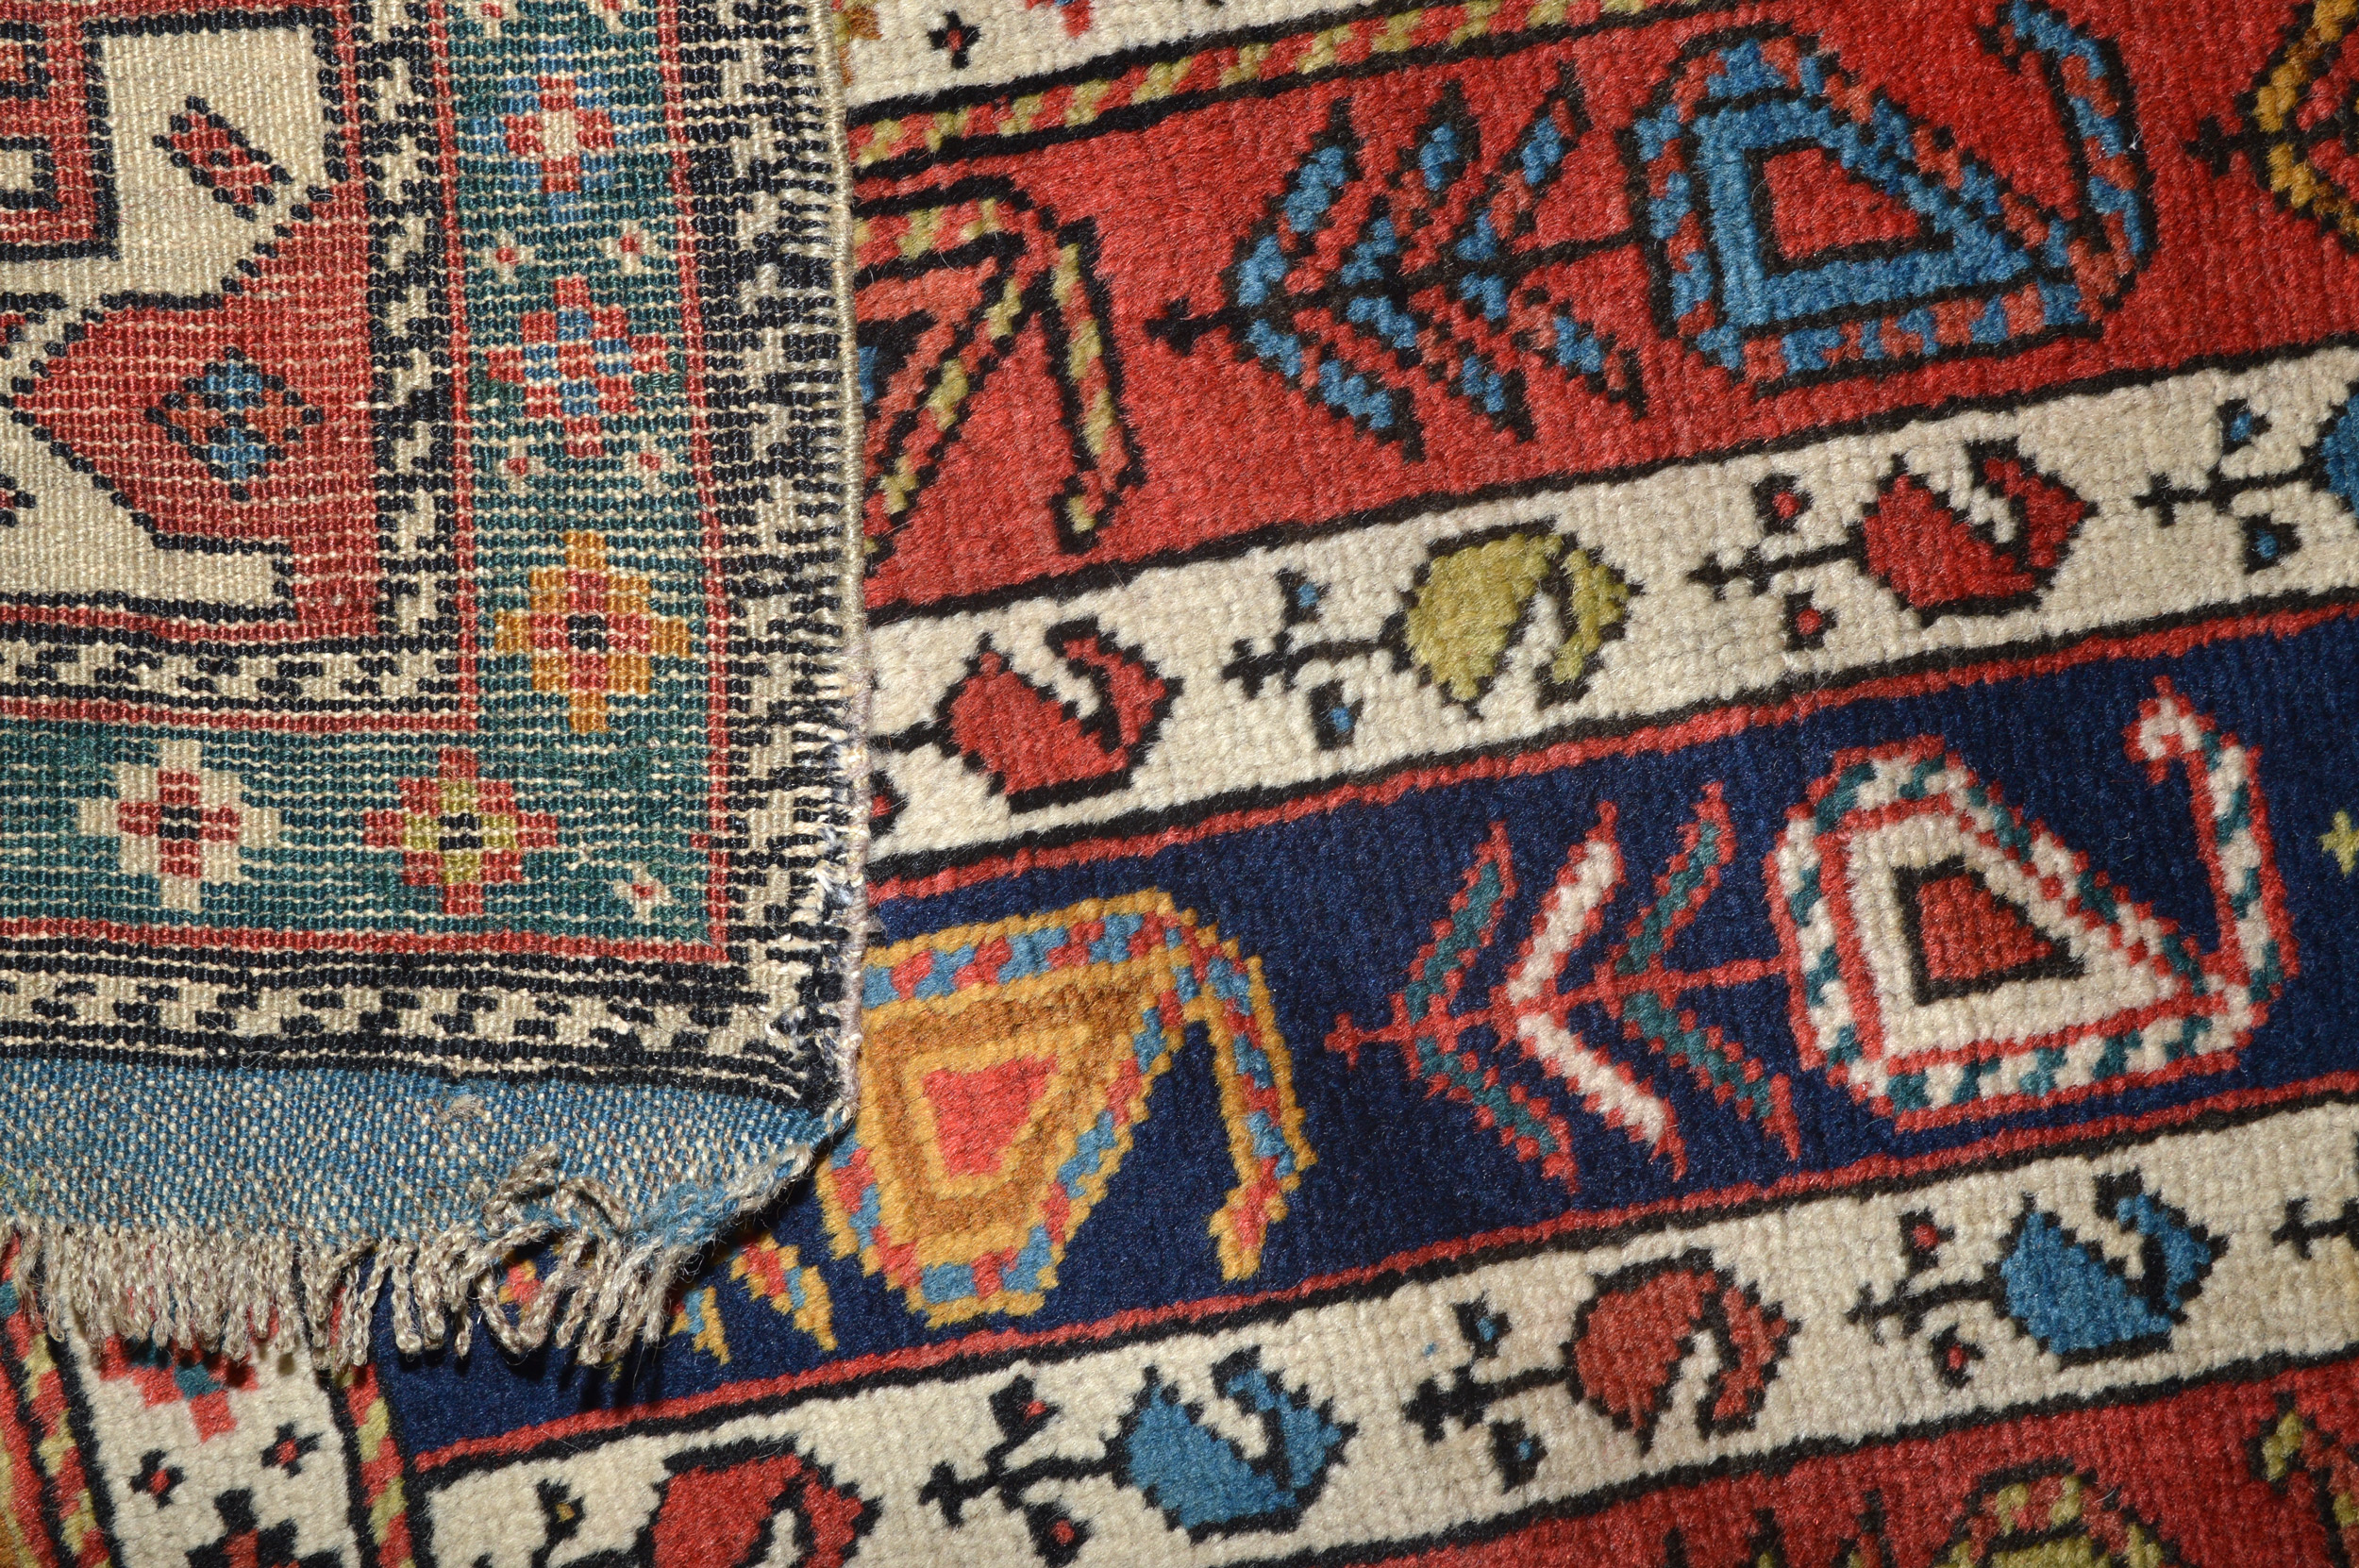 Weave of an antique Caucasian Shirvan rug, late 19th century - Douglas Stock Gallery, antique Oriental rugs, antique Caucasian rugs, antique Persian rugs, Boston,MA area